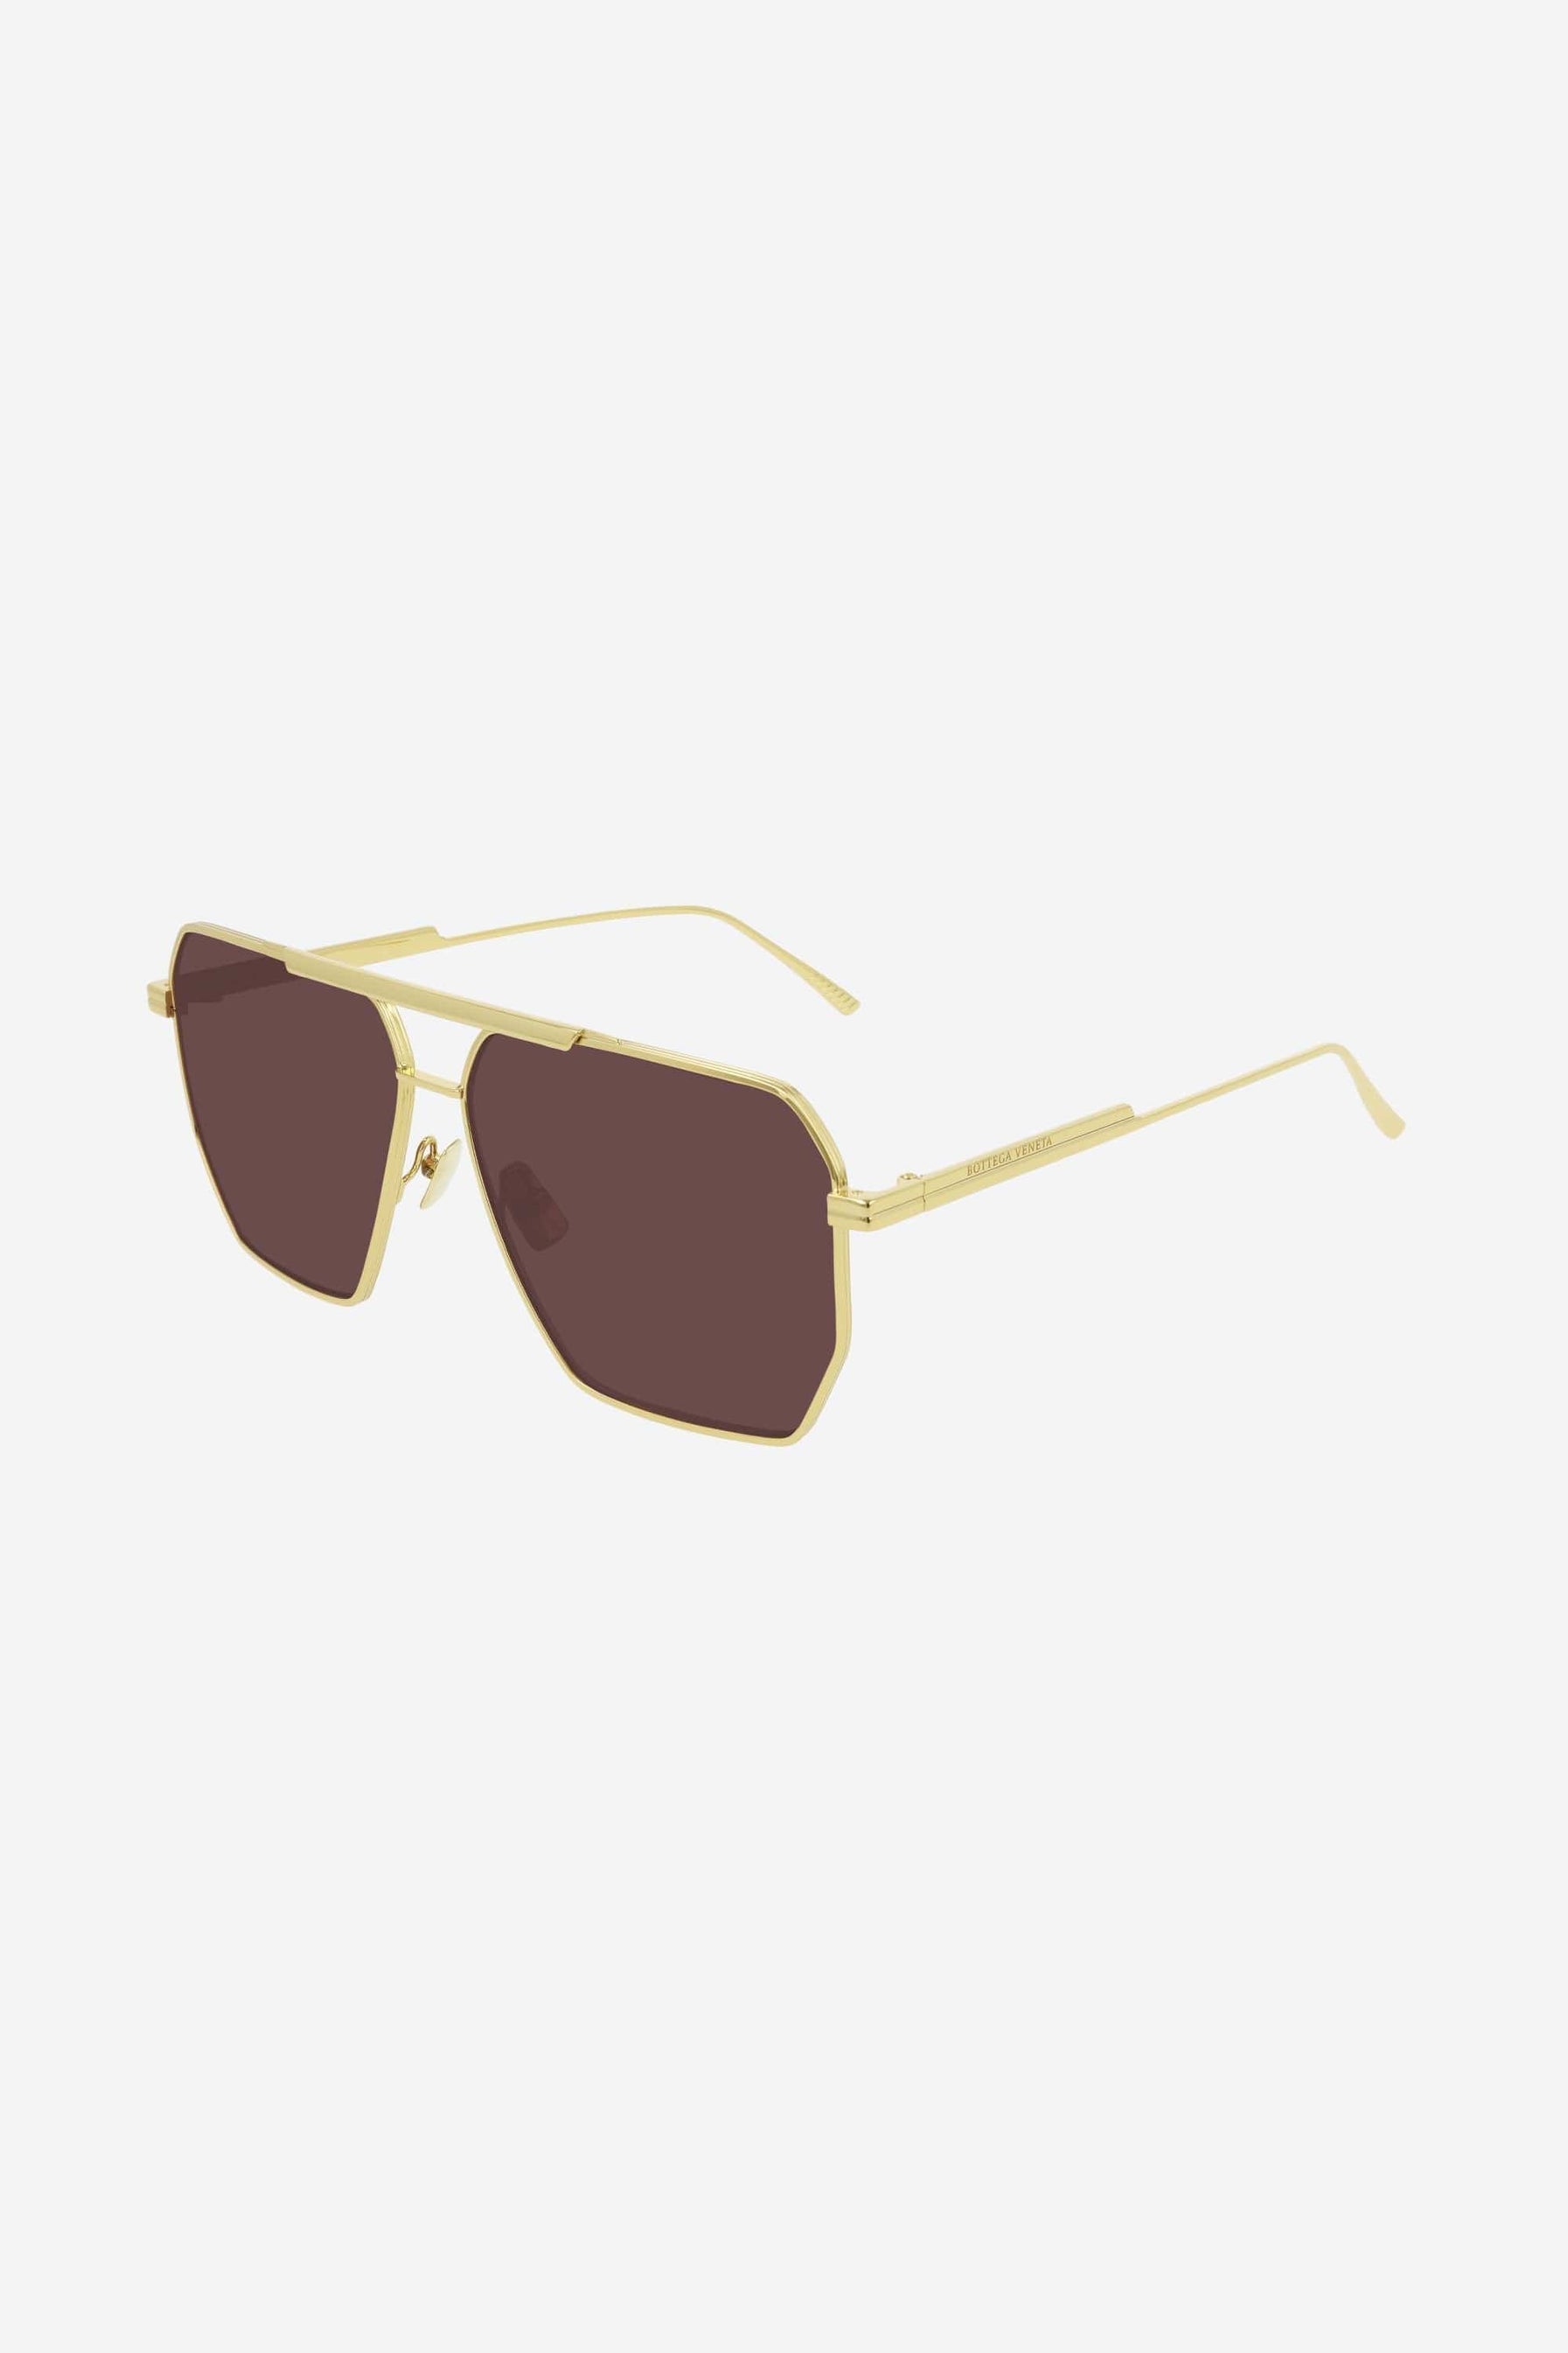 Bottega Veneta light caravan gold and pink sunglasses - Eyewear Club